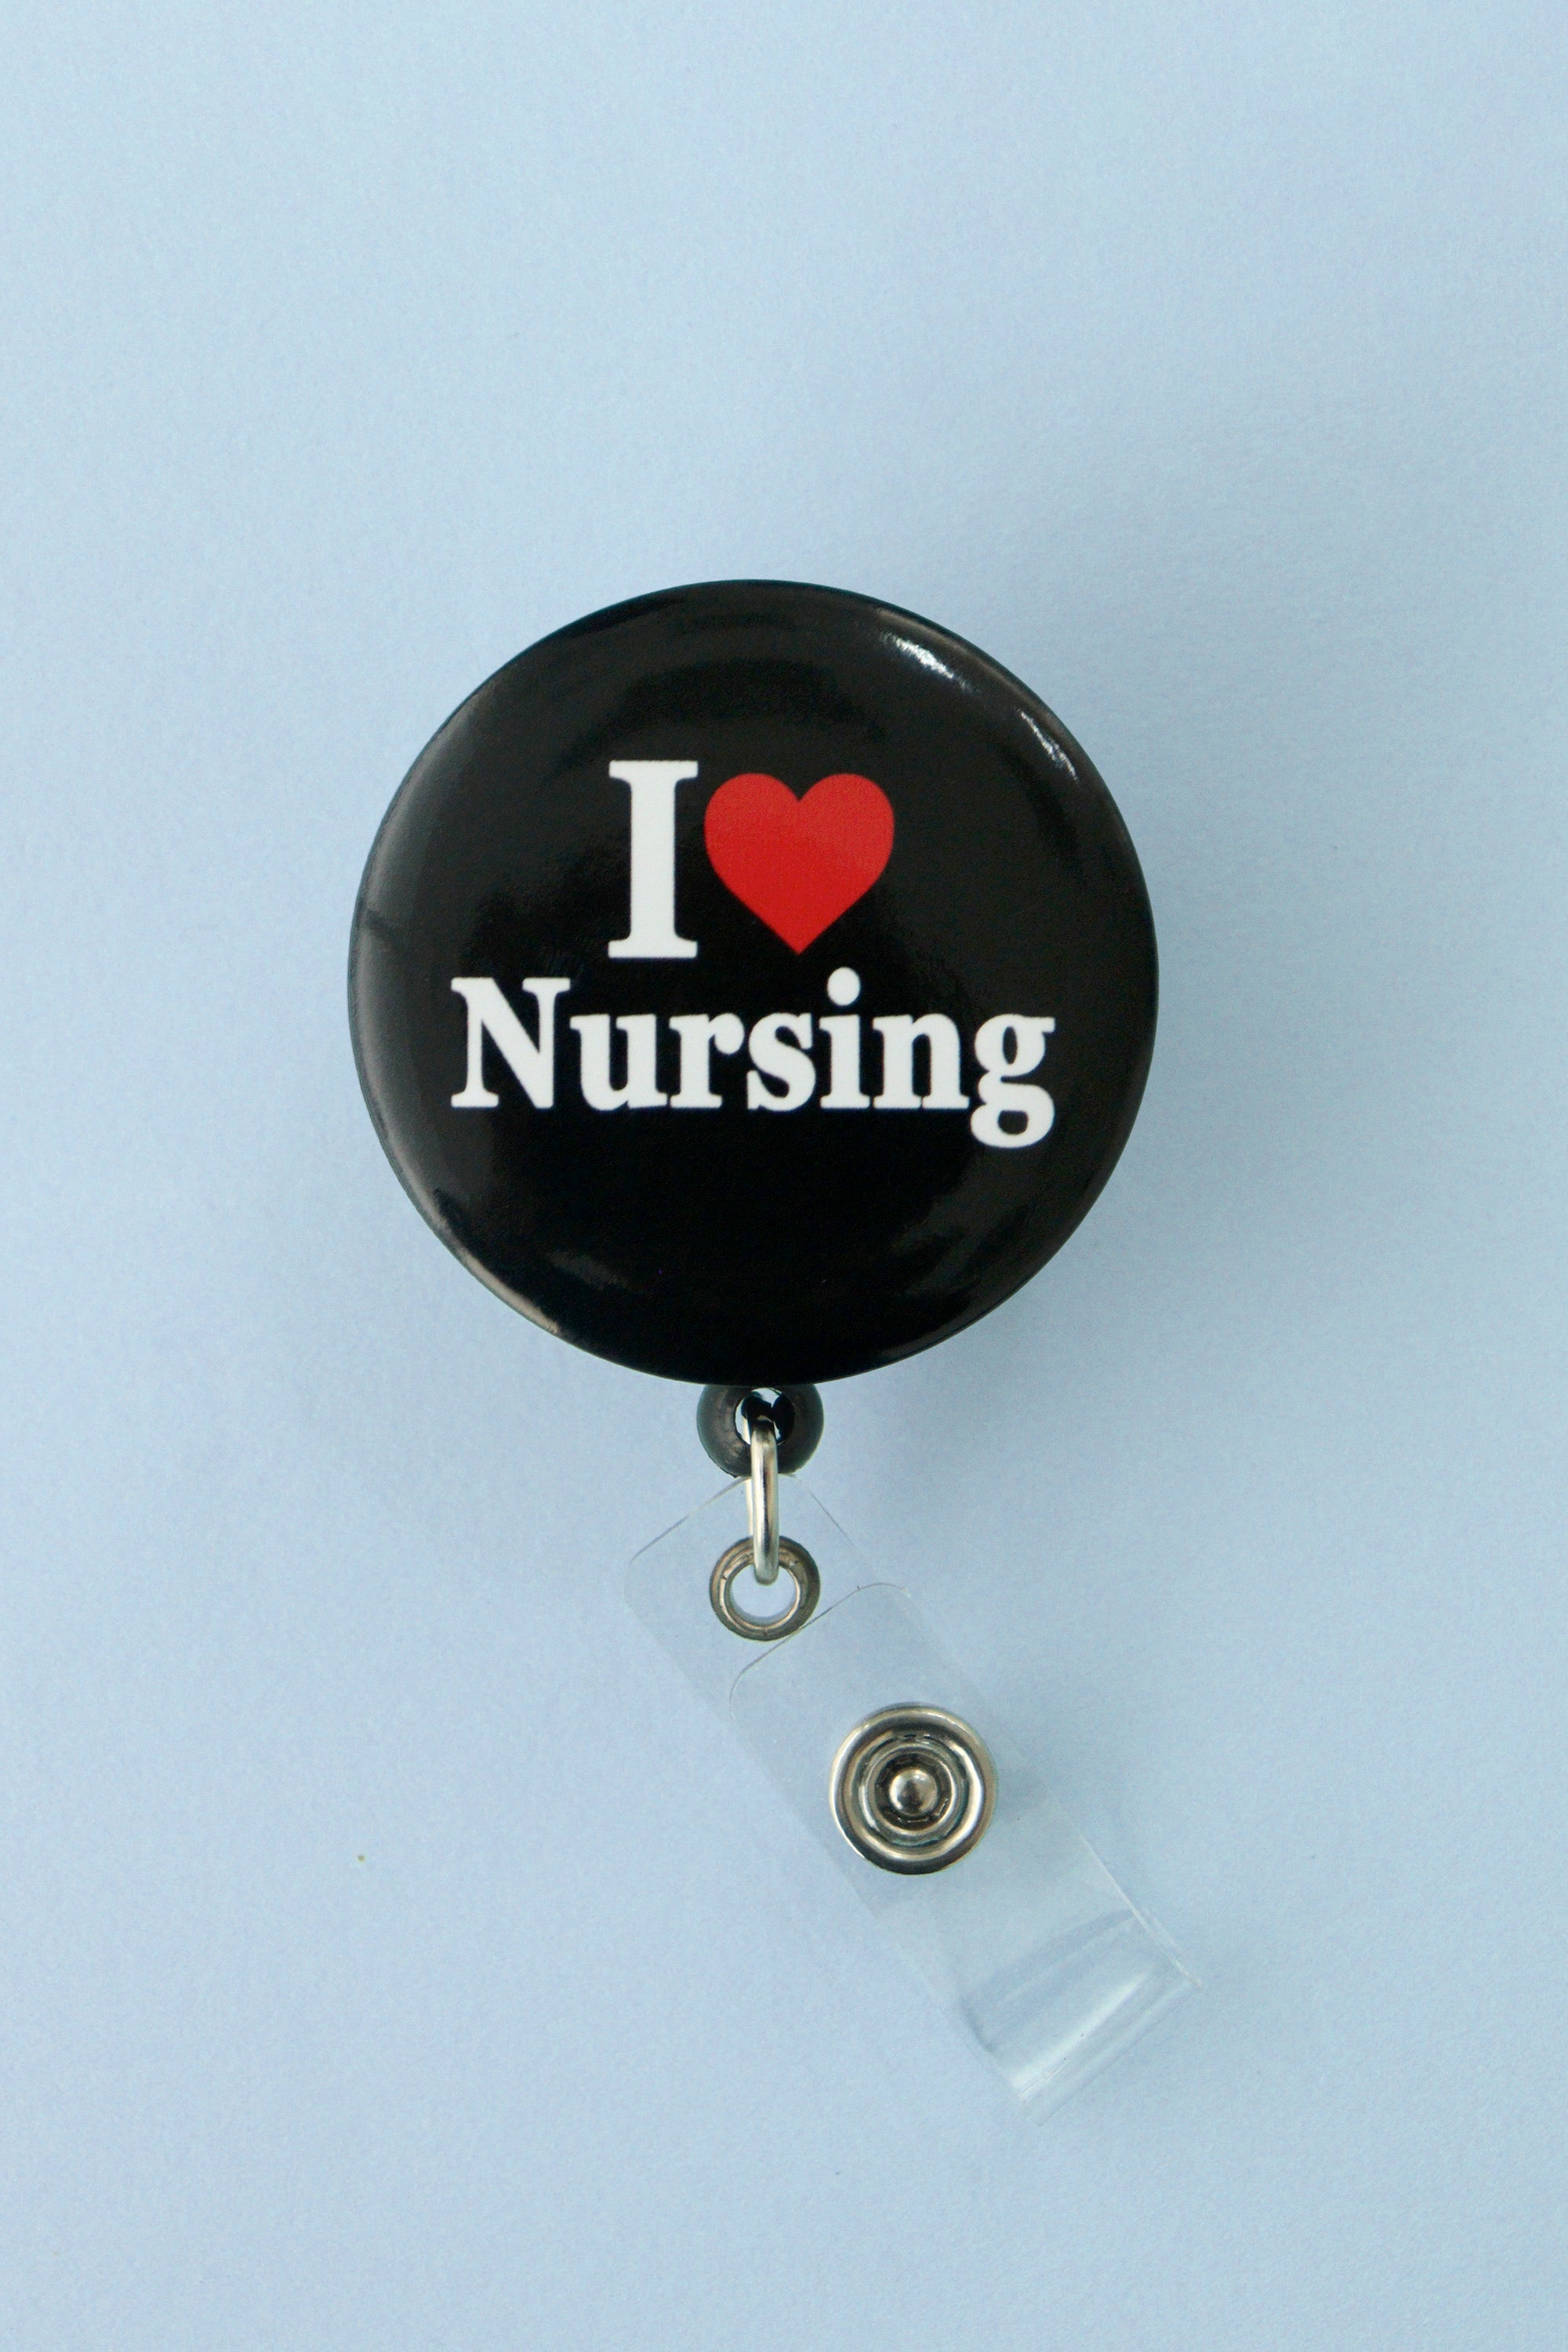 products-nursing1-152083-jpg